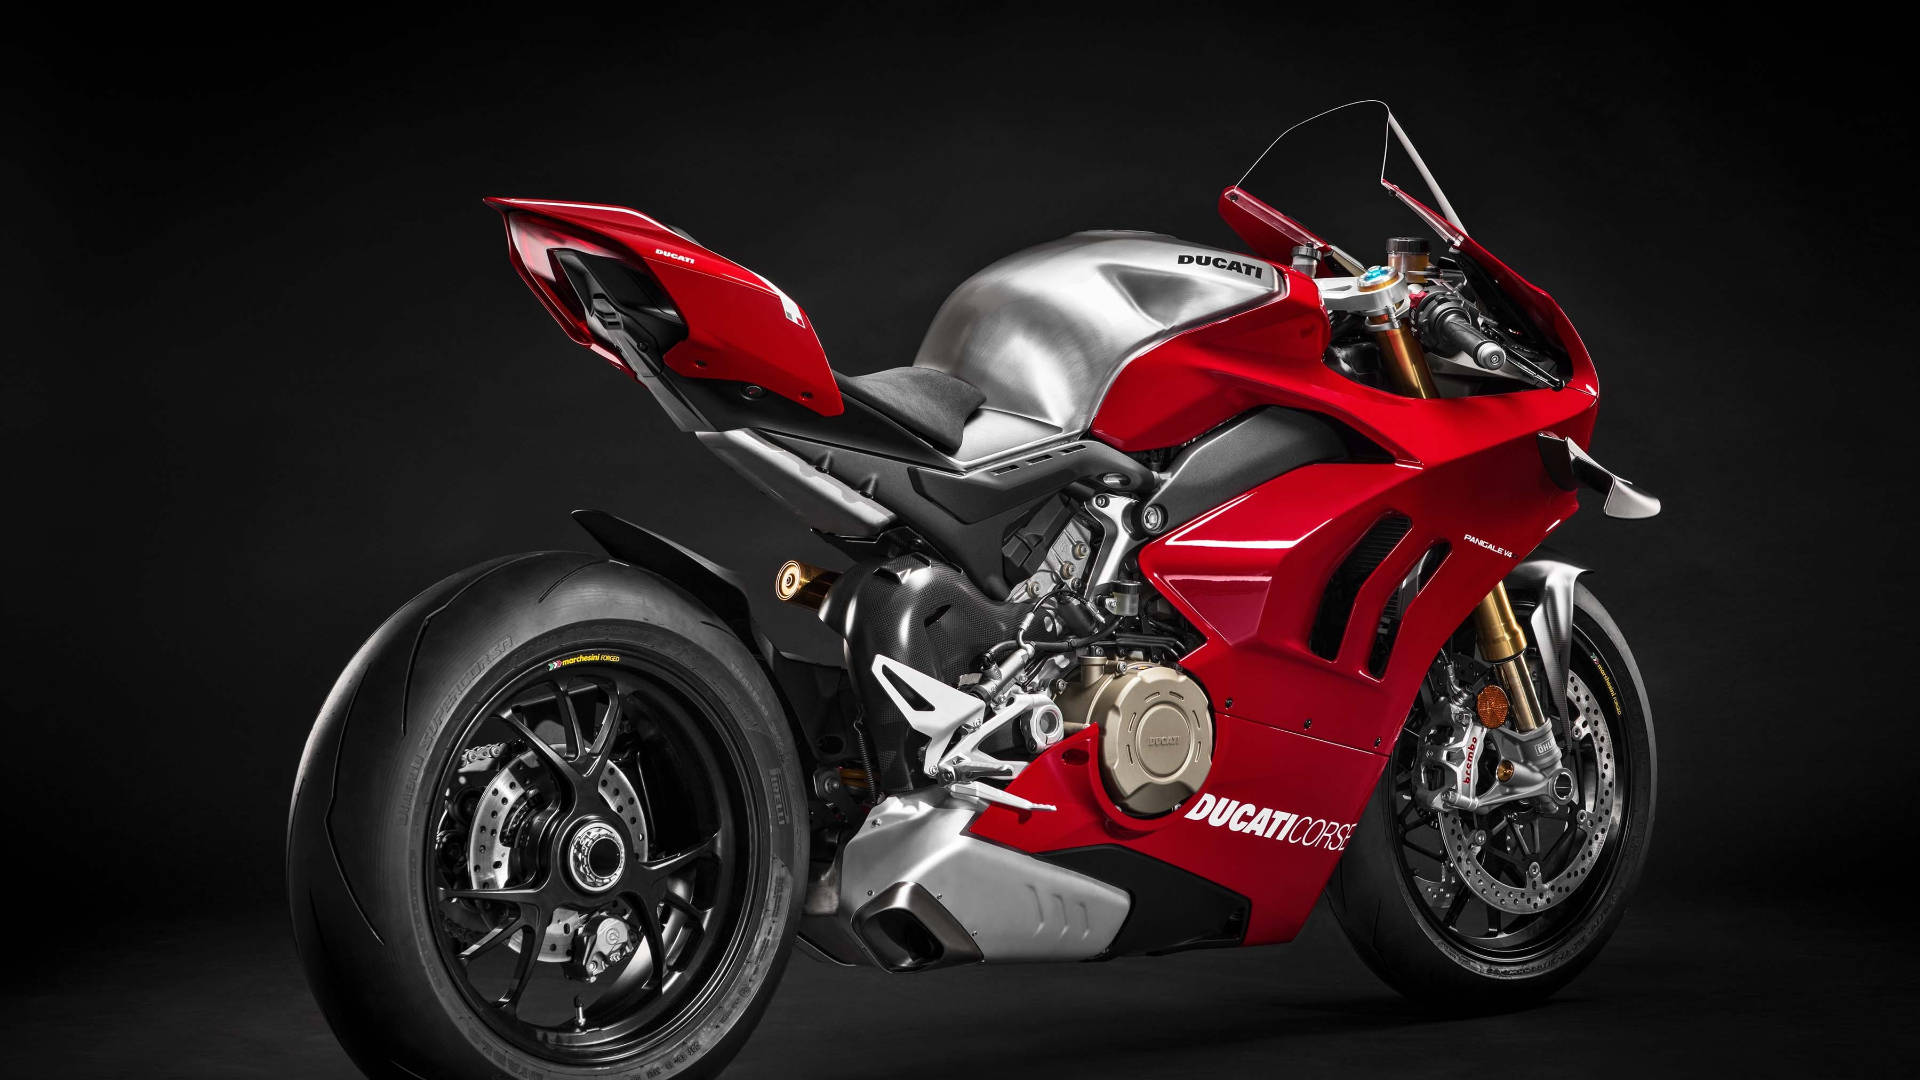 Powerful Ducati Motorbike In Action Wallpaper